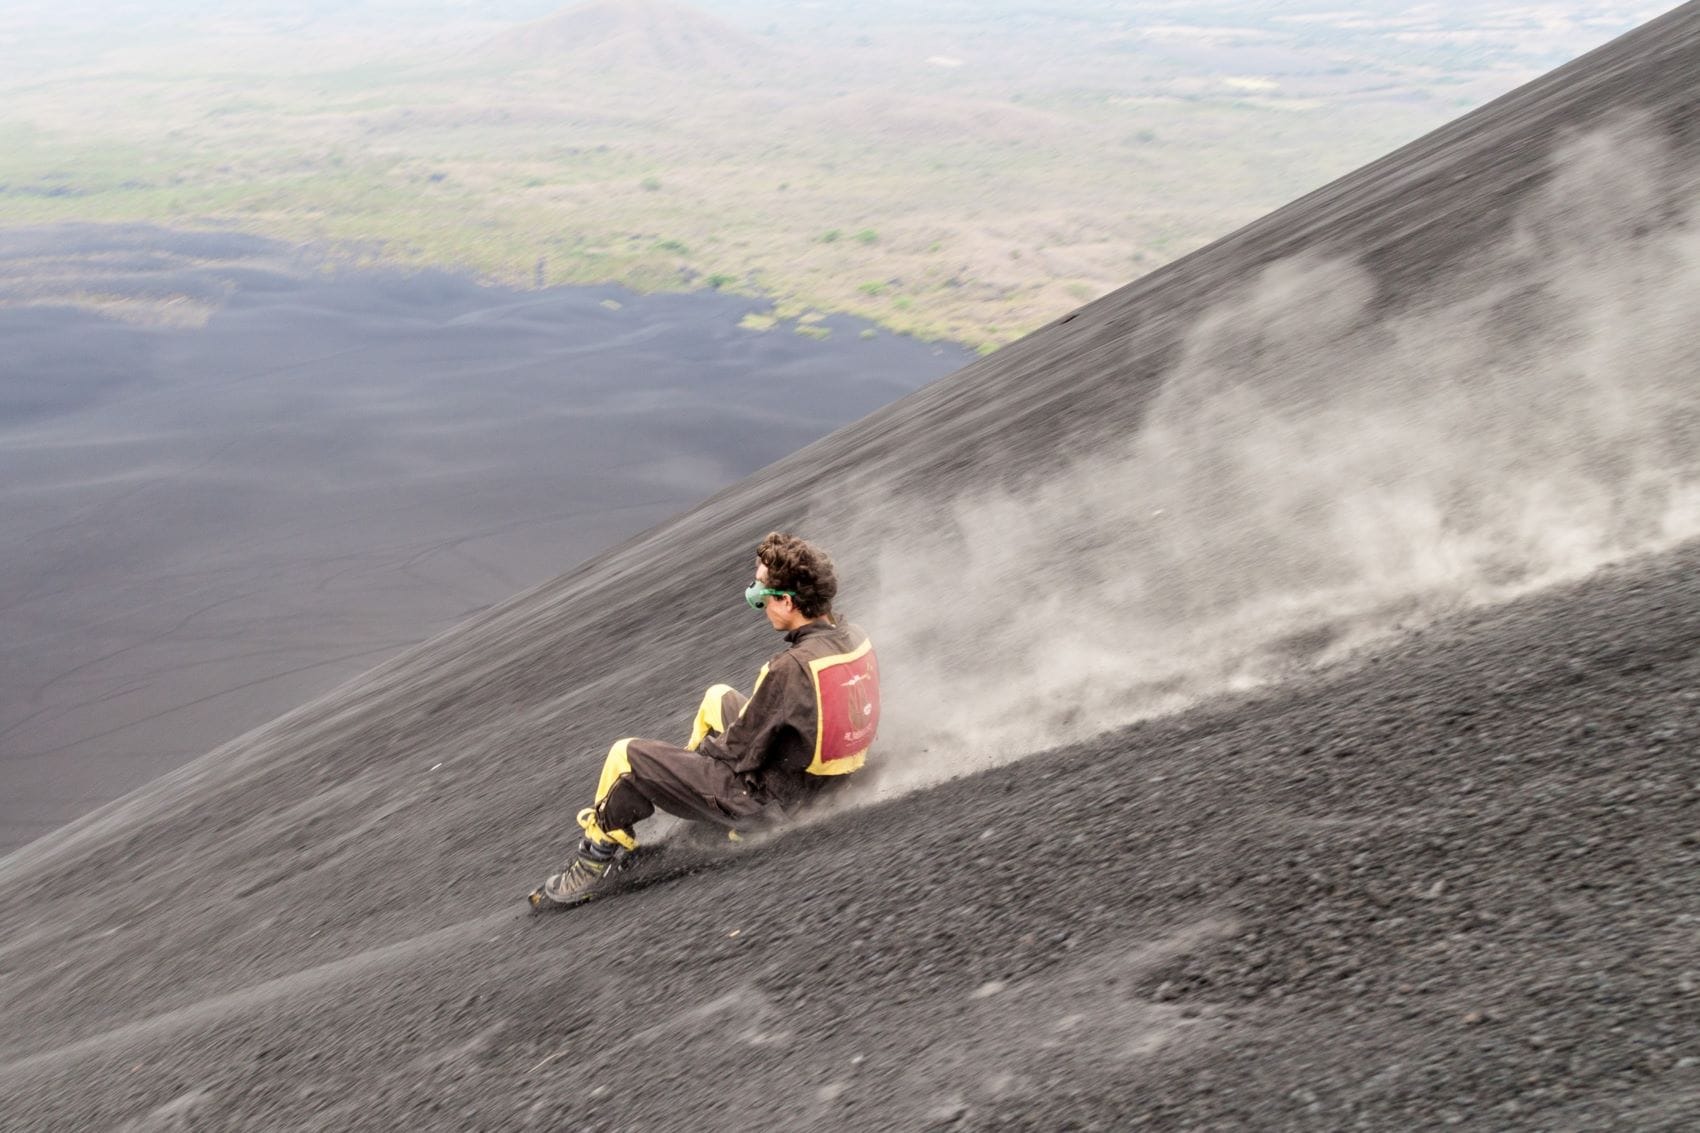 Mann fährt mit Schlitten Vulkan Cerro Negro runter 